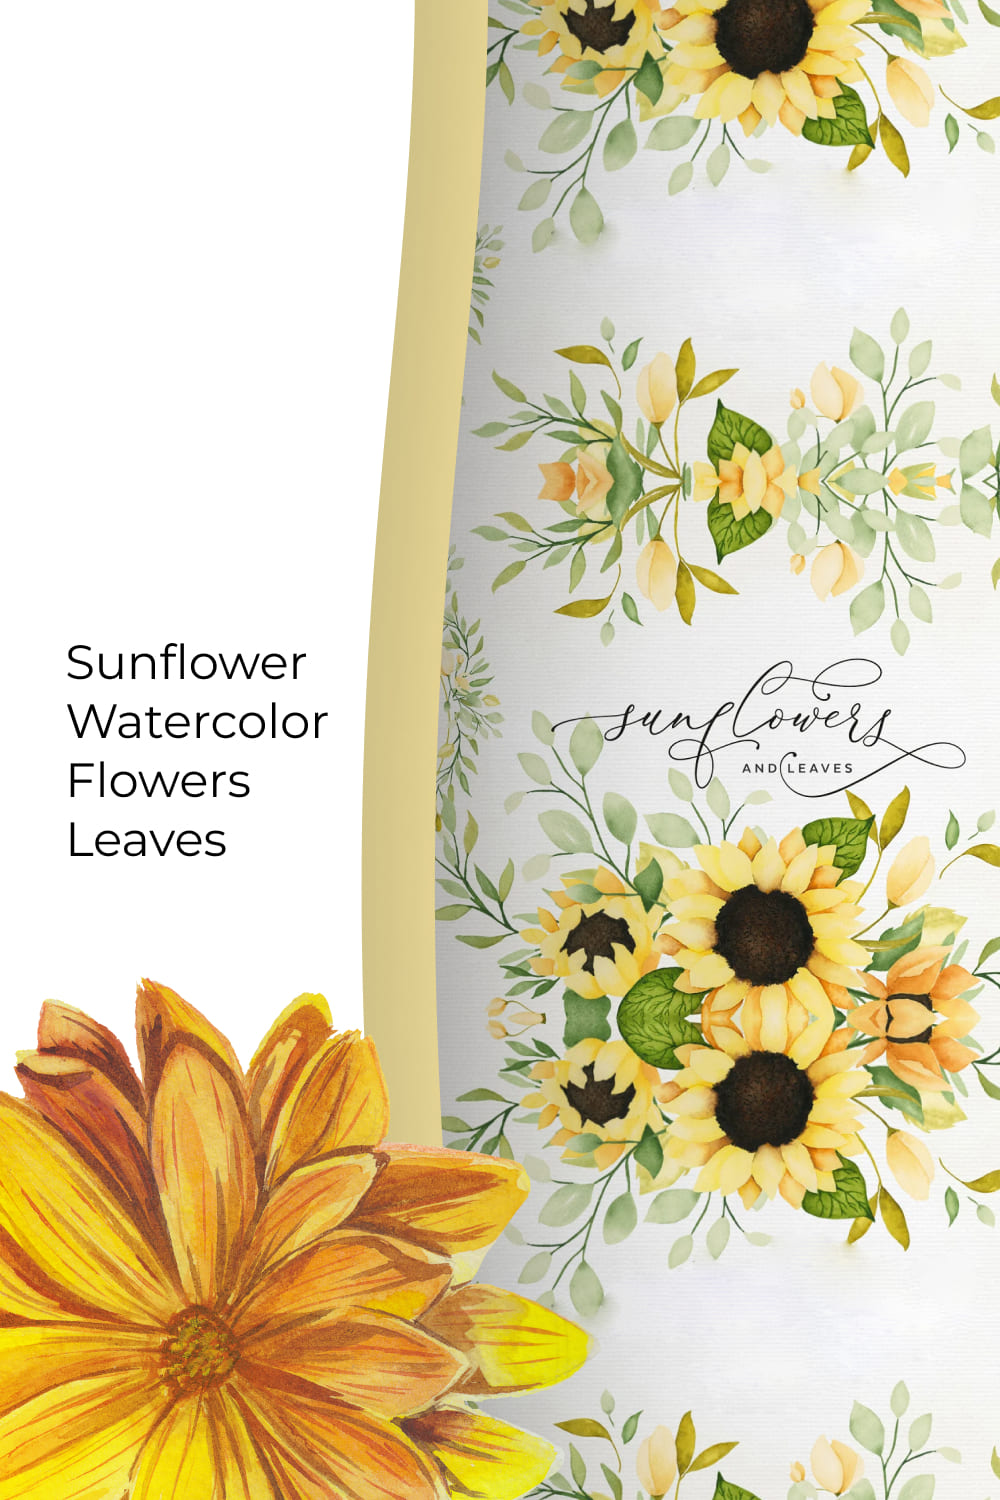 Sunflower Watercolor Flowers Leaves.